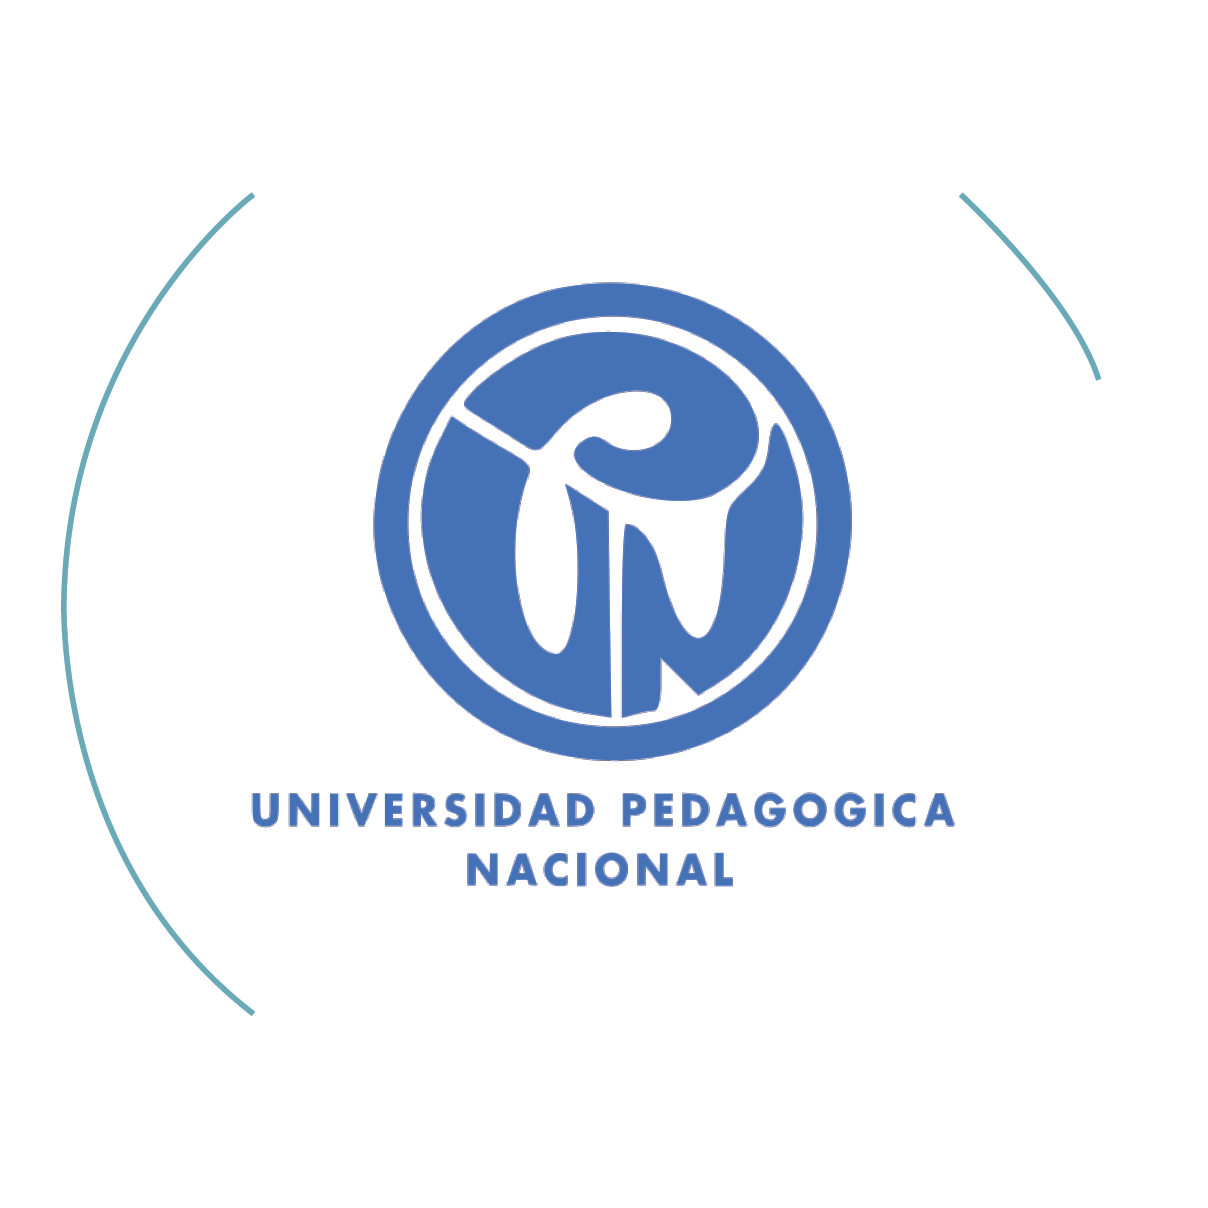 Universidad Pedagogica Nacional logo